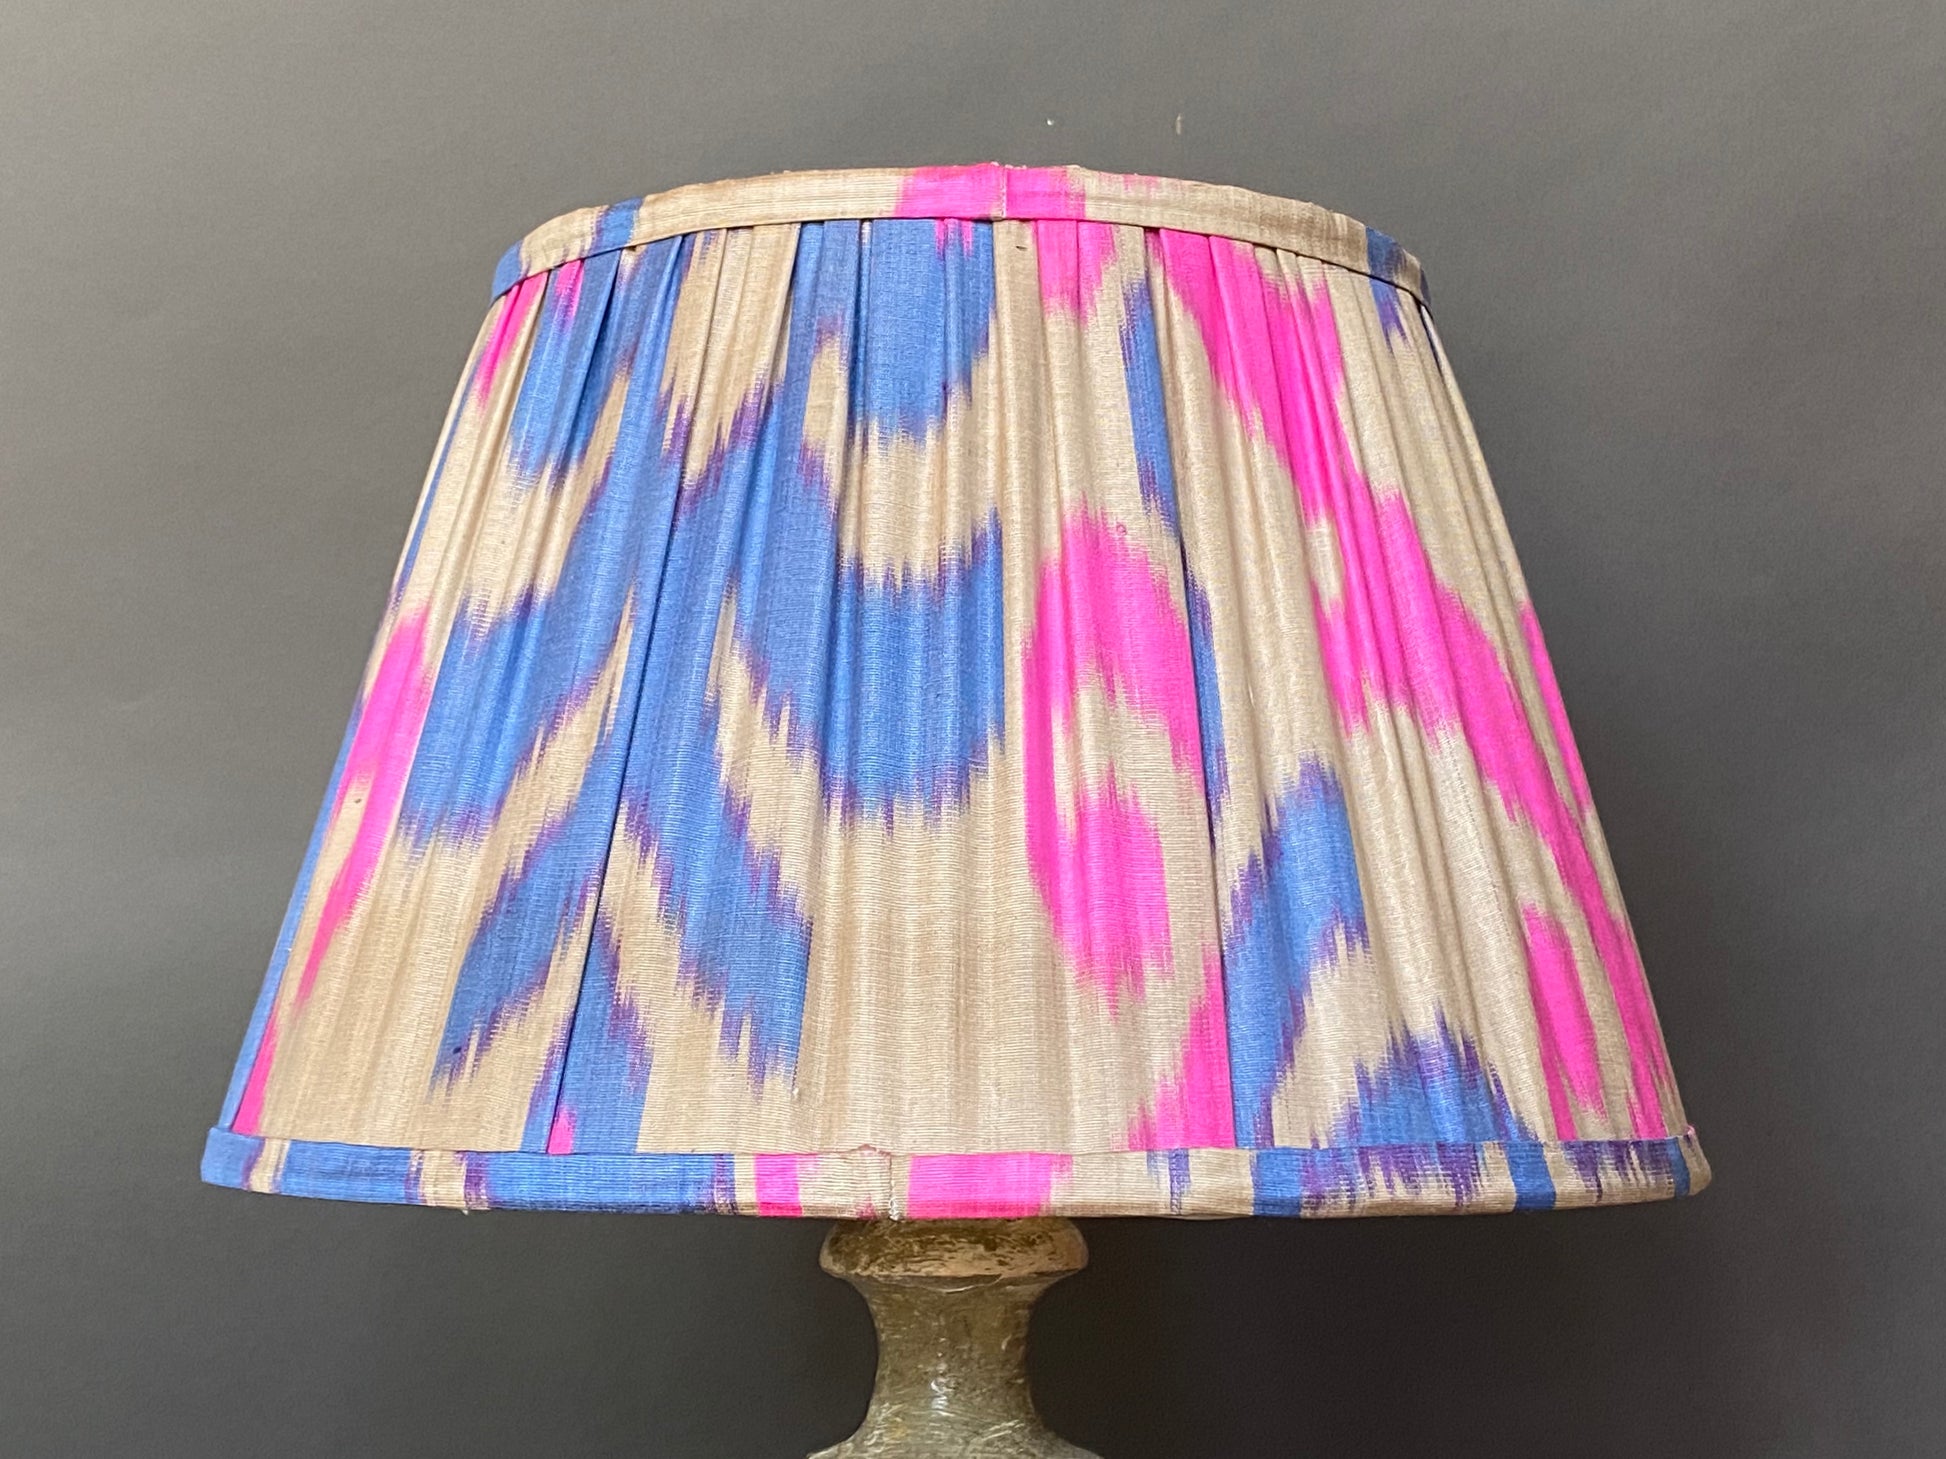 Bright pink and blue ikat silk lampshade